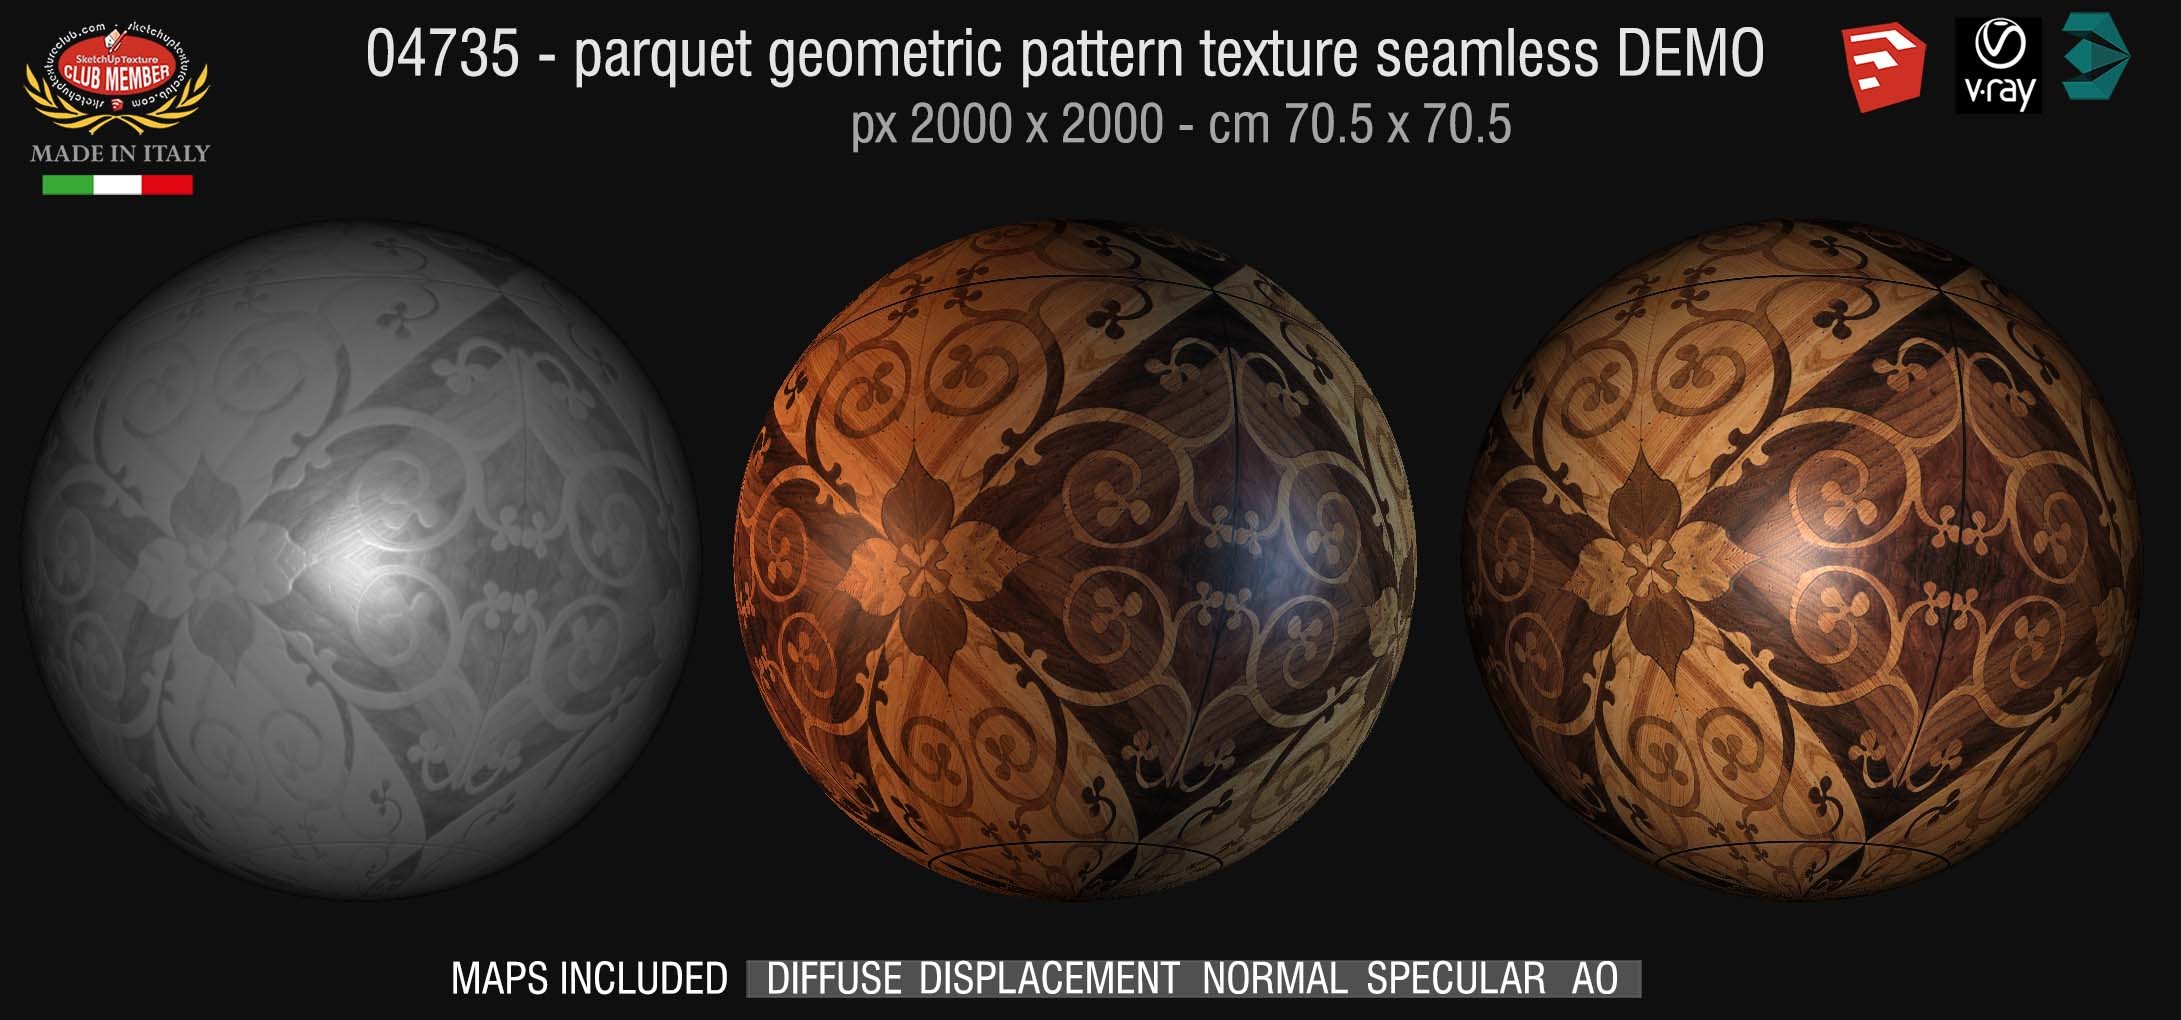 04735 HR Parquet geometric pattern texture seamless + maps DEMO